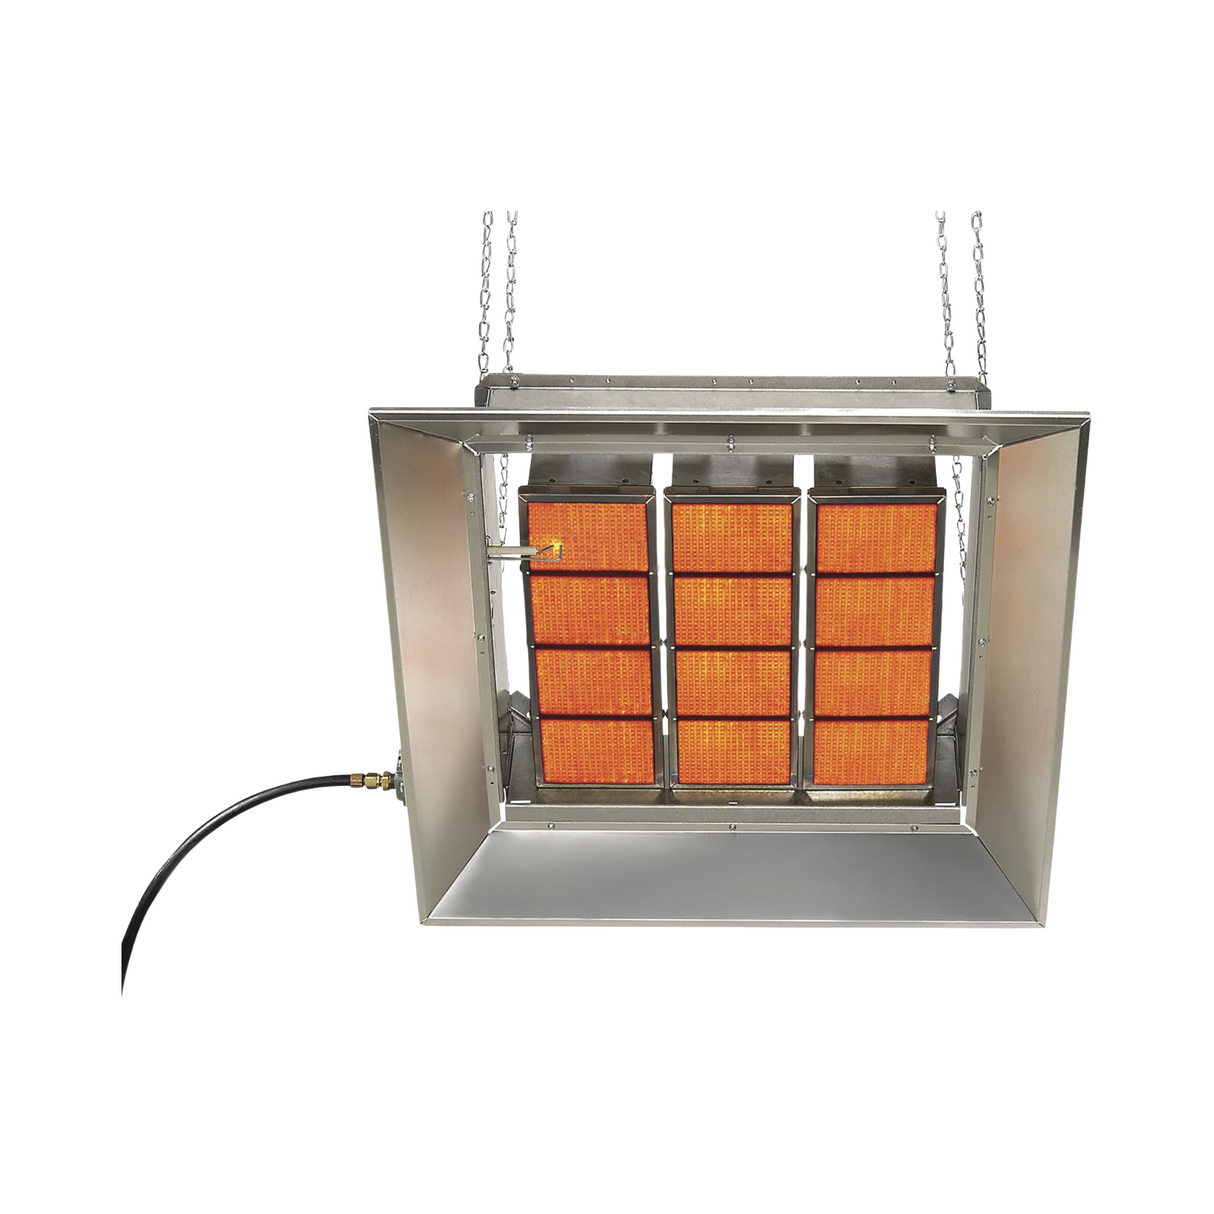 Sunstar Heating Products SG10-N 43840010 100000 BTU Infrared Ceramic Heater, Natural Gas